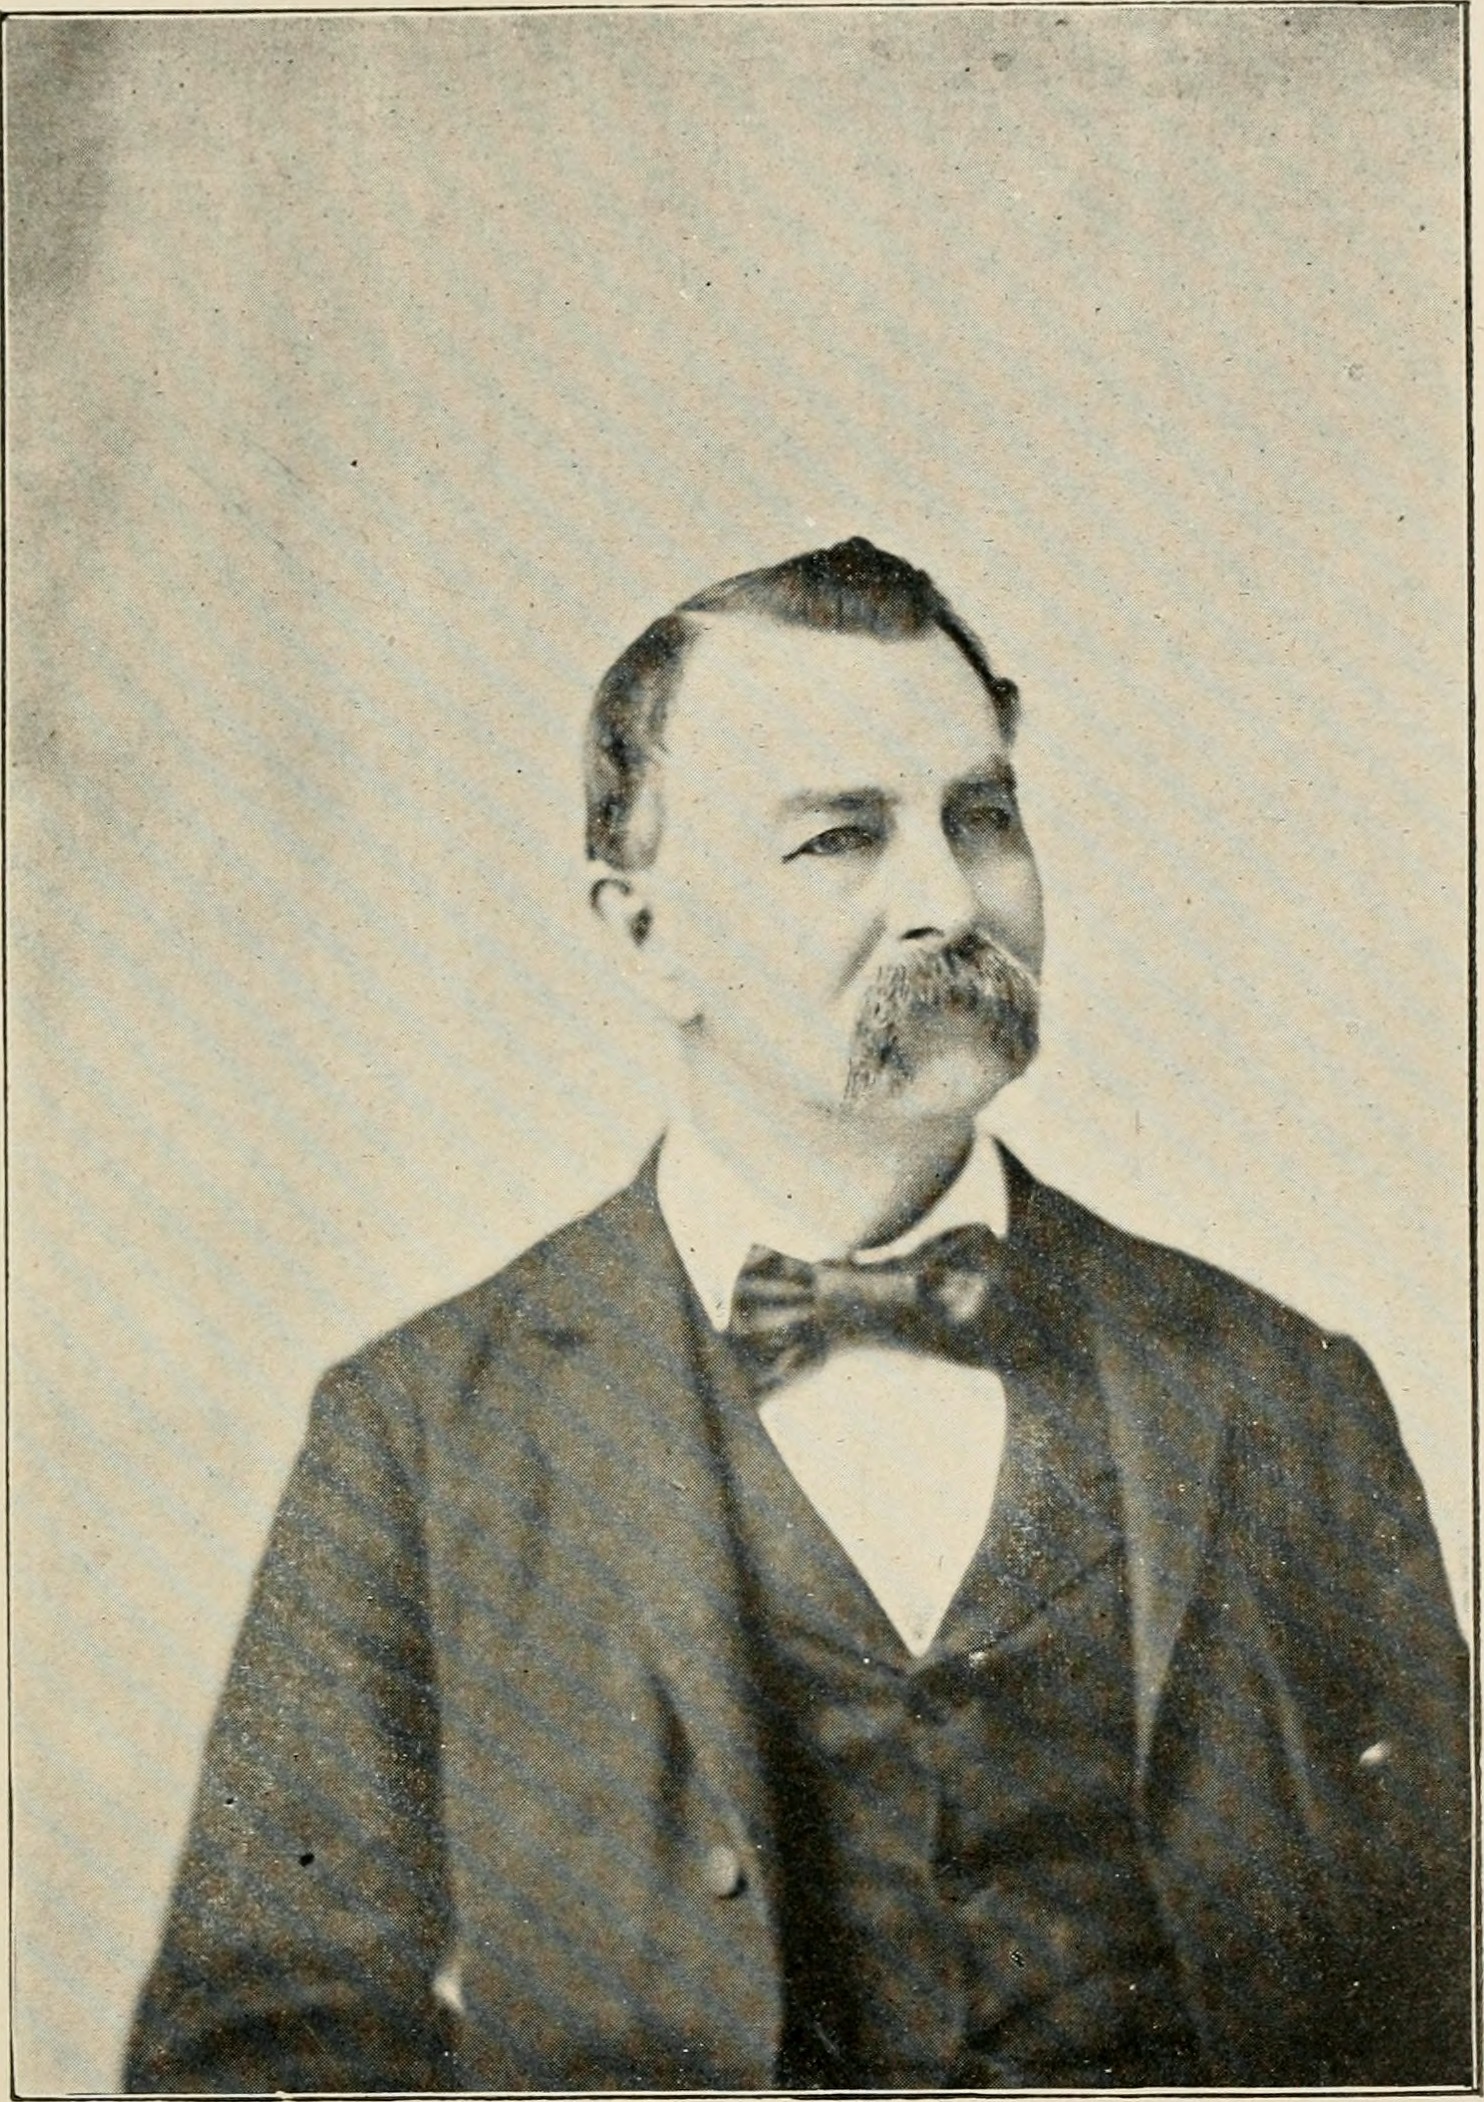 A.W. Merrick